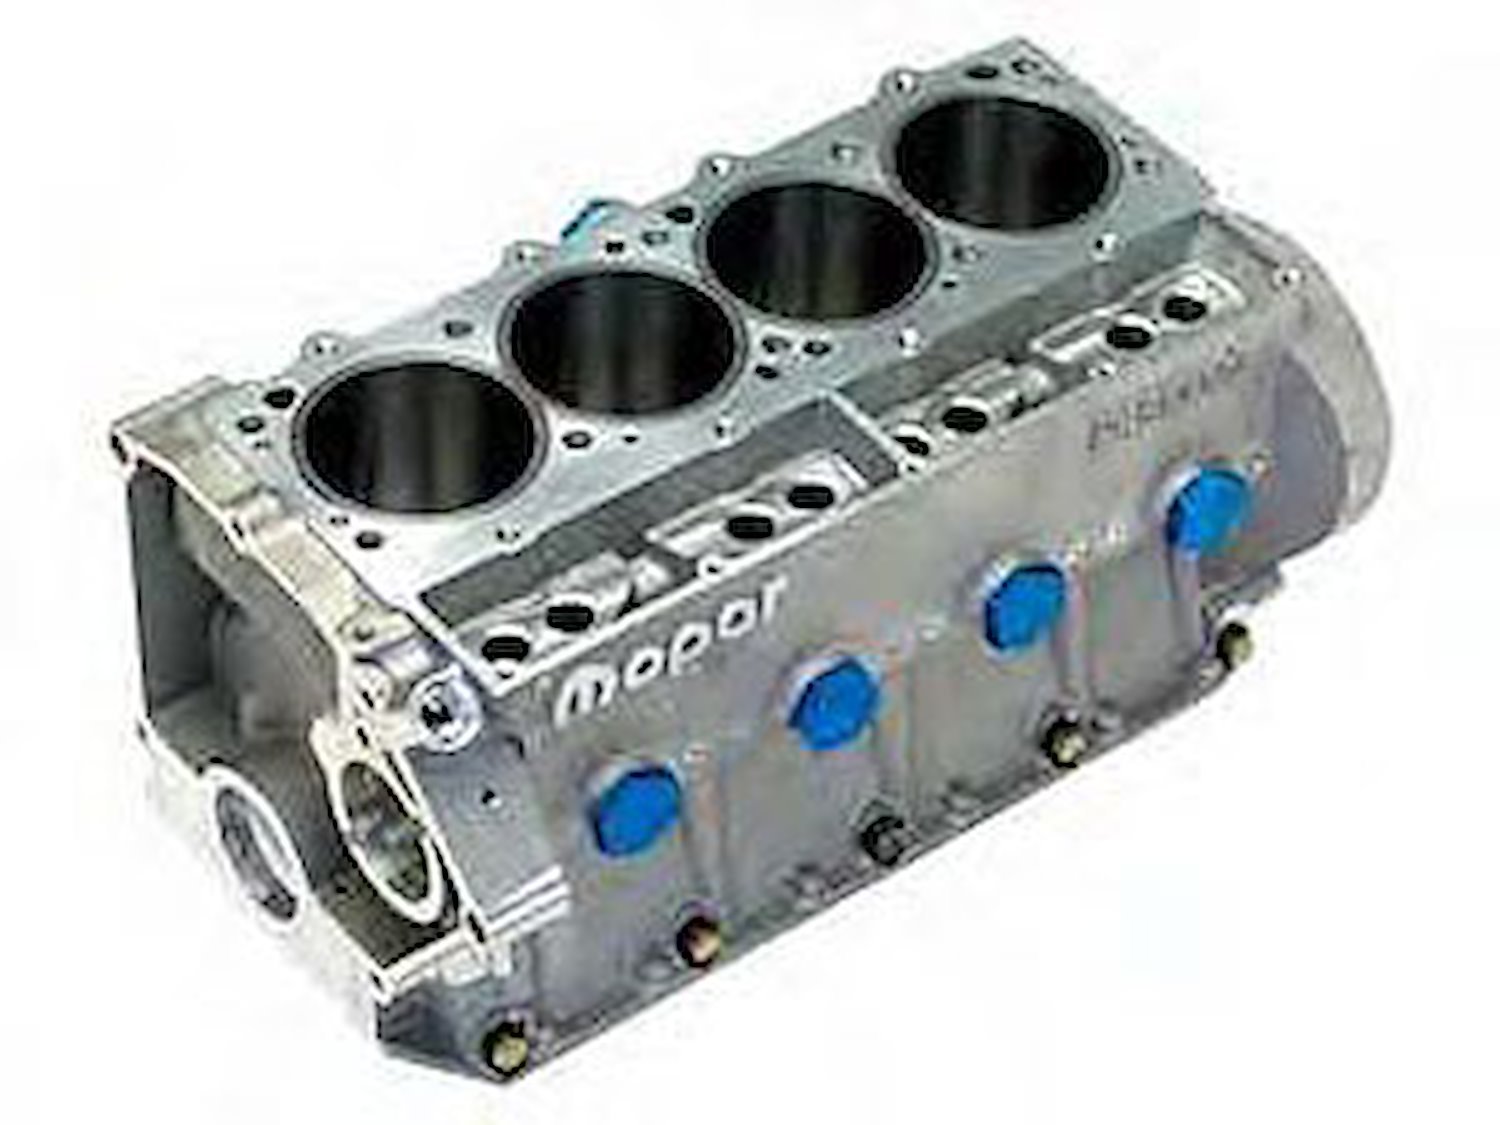 A4 Aluminum Engine Block Fits W8, W9 or